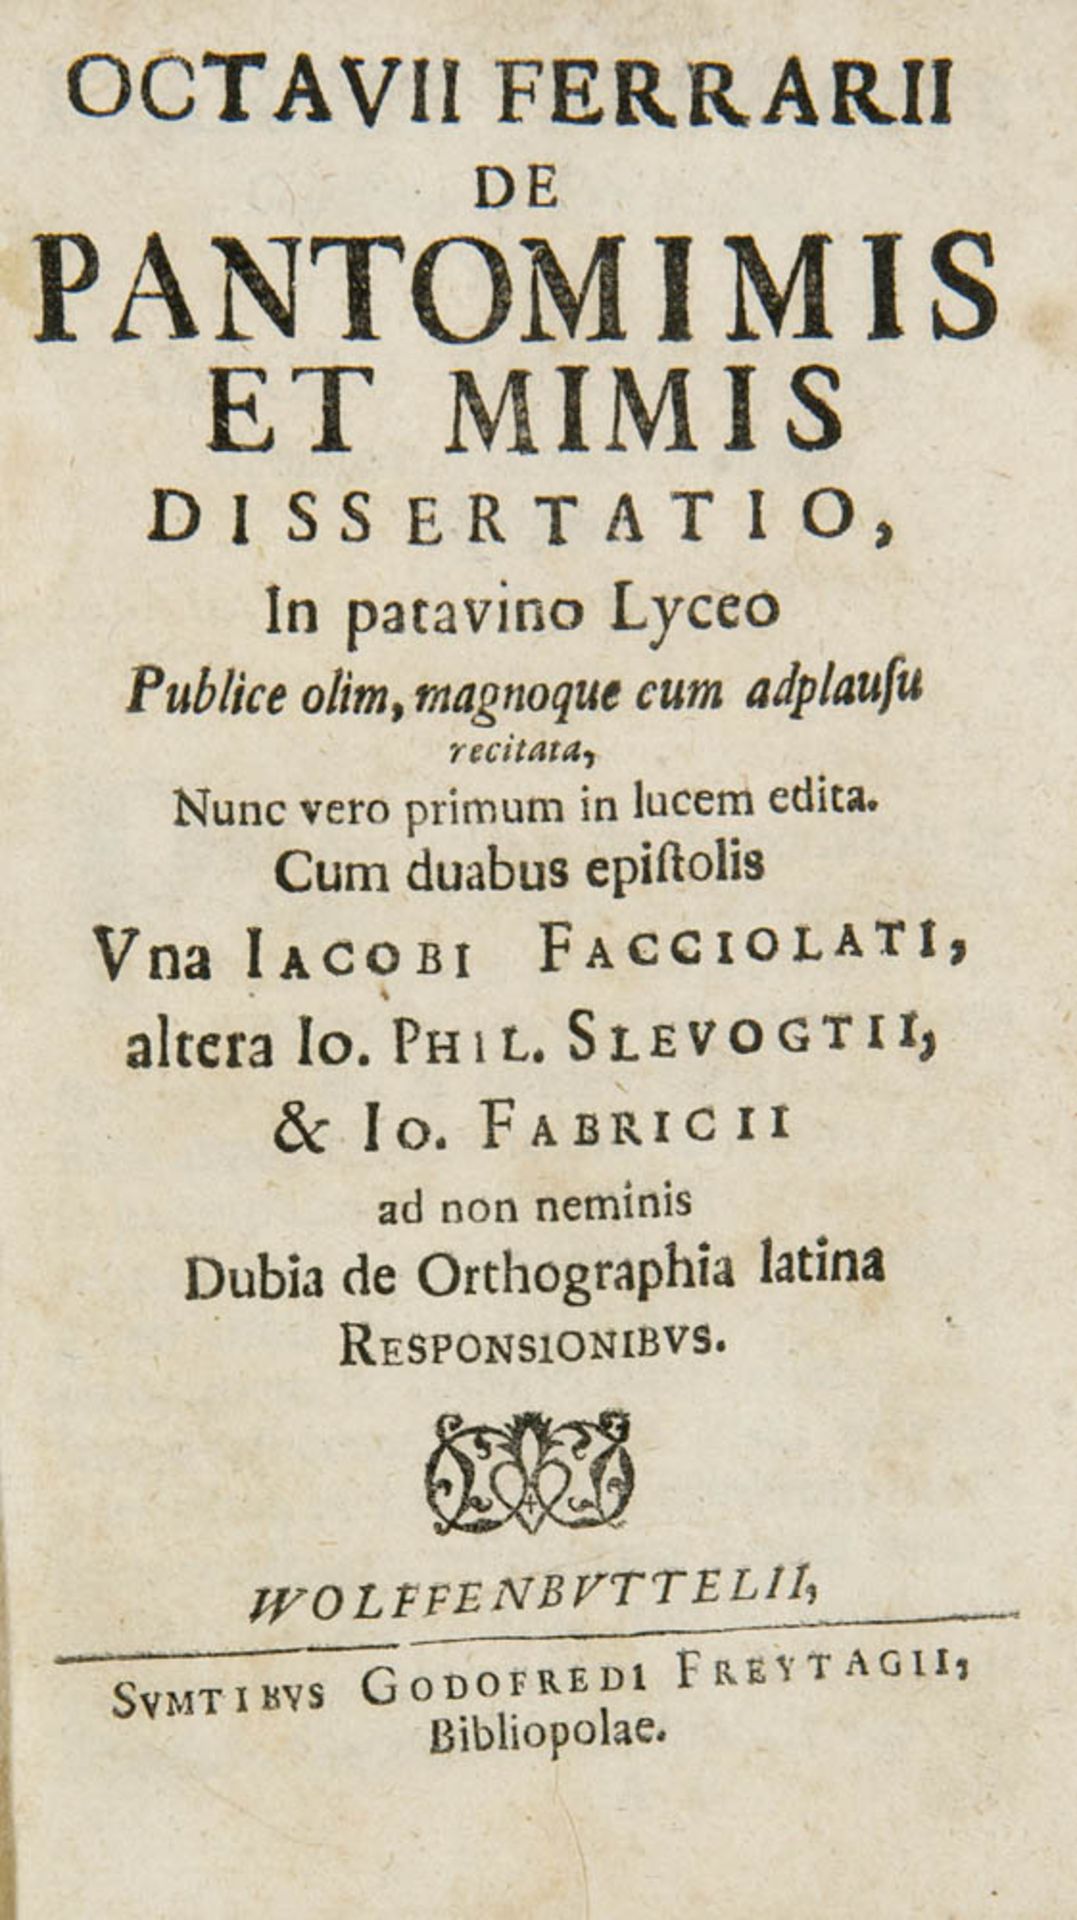 Ferrari, Ottavio. De pantomimis et mimis dissertatio, in patavino Lyceo. Wolfenbüttel, Freytag,(